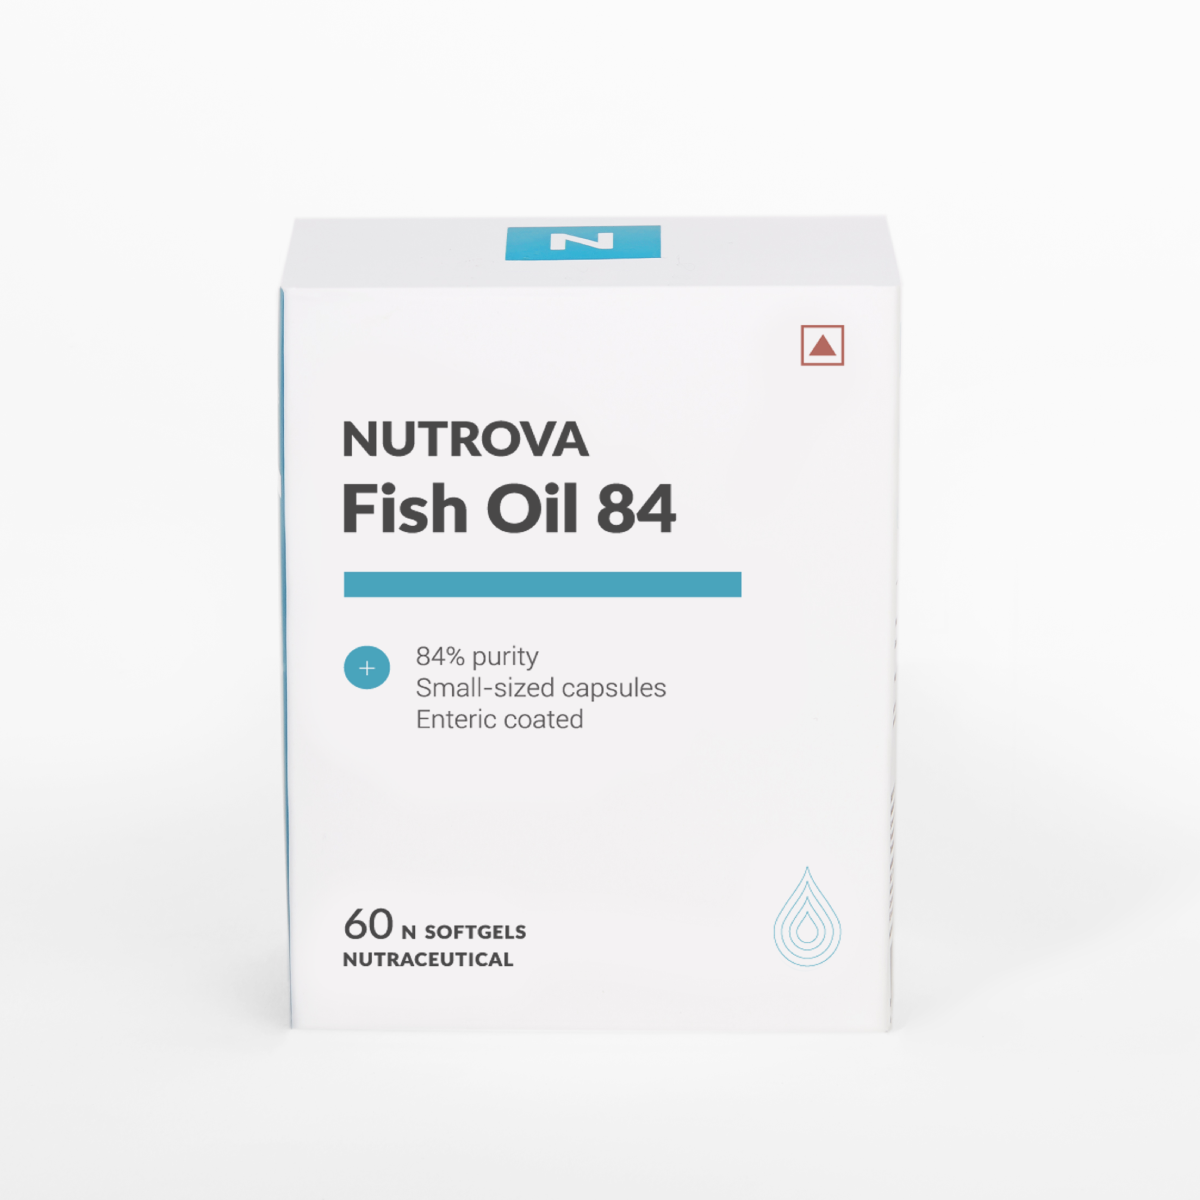 Nutrova Fish Oil 84